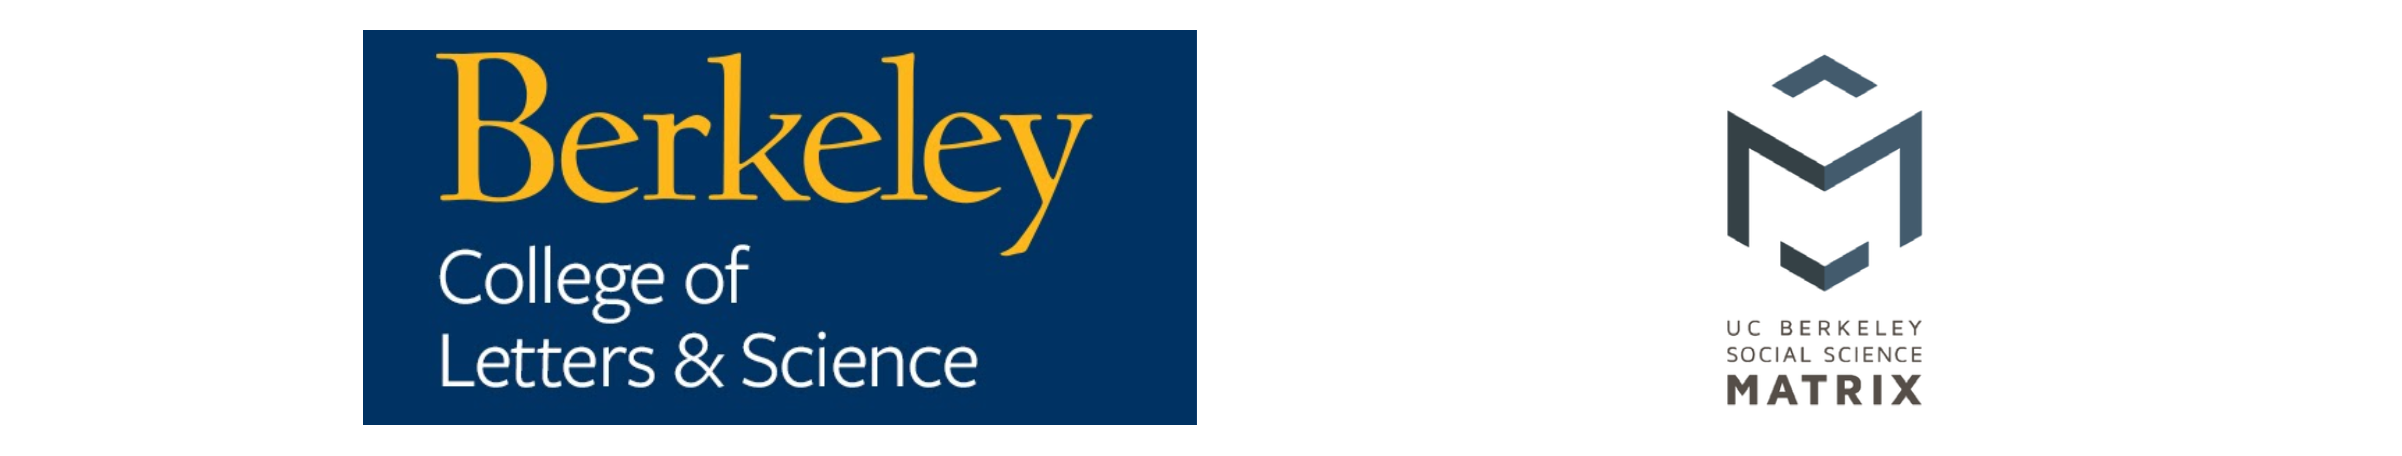 Memory-logo - UC Berkeley Sutardja Center